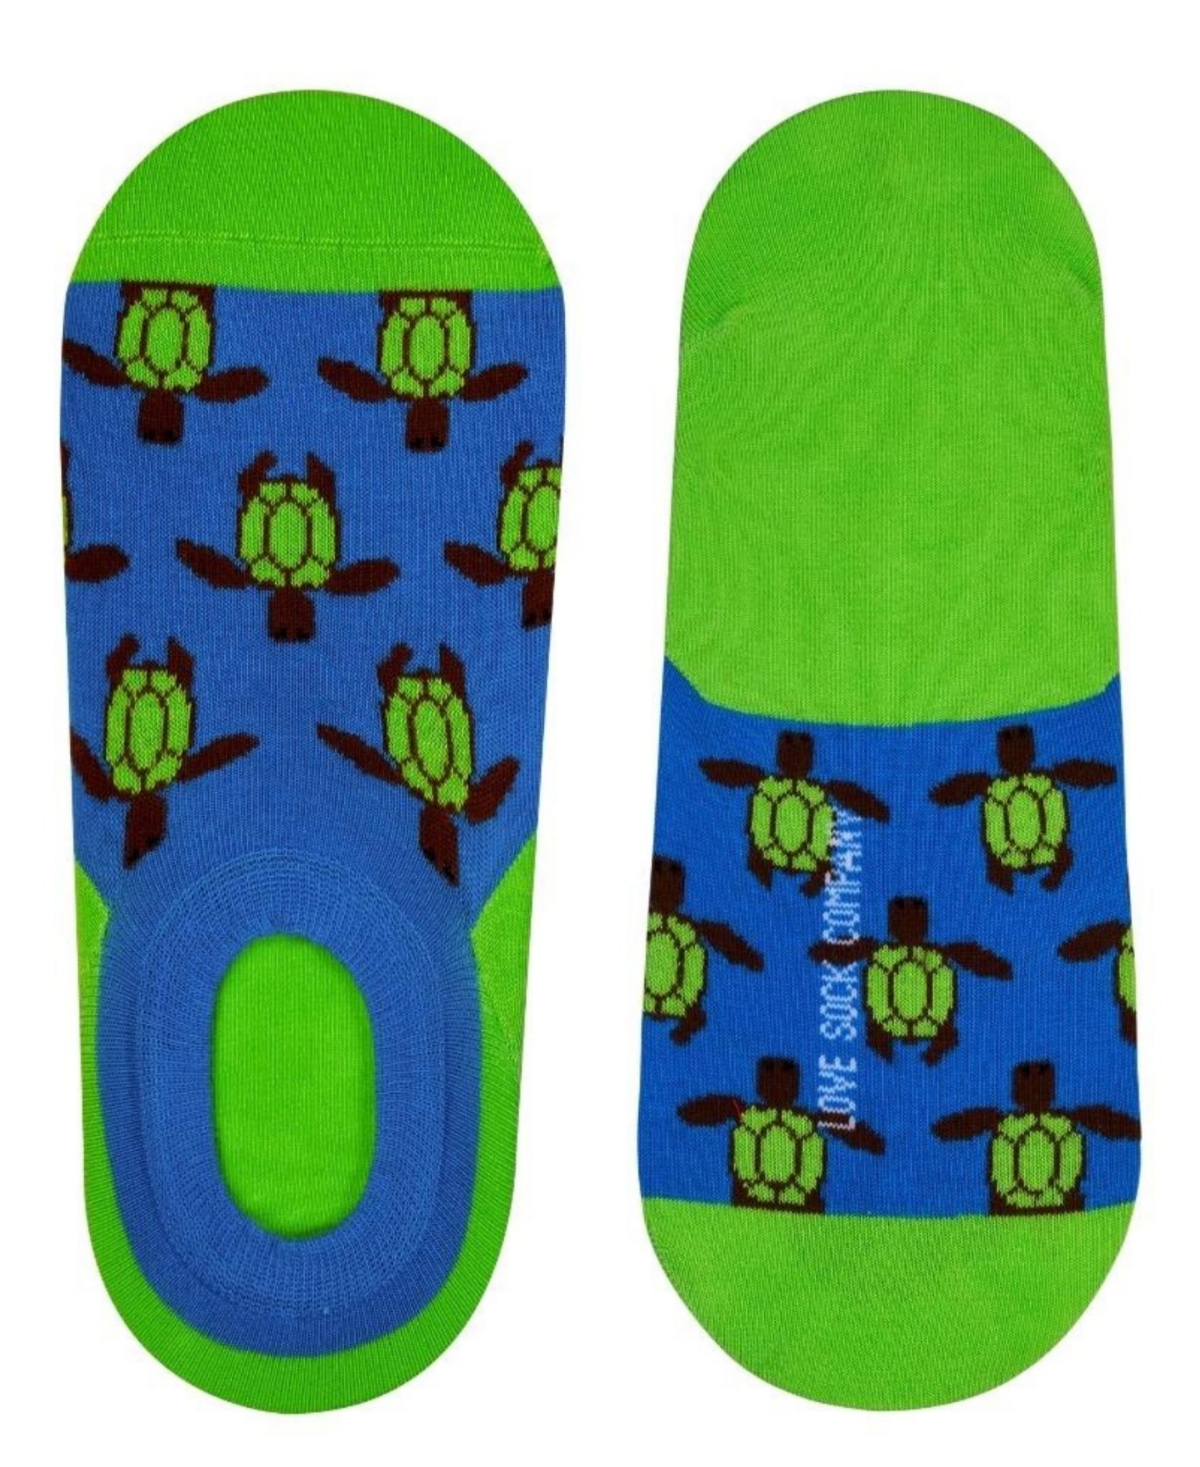 Love Sock Company Men's Turtle Novelty No-Show Socks